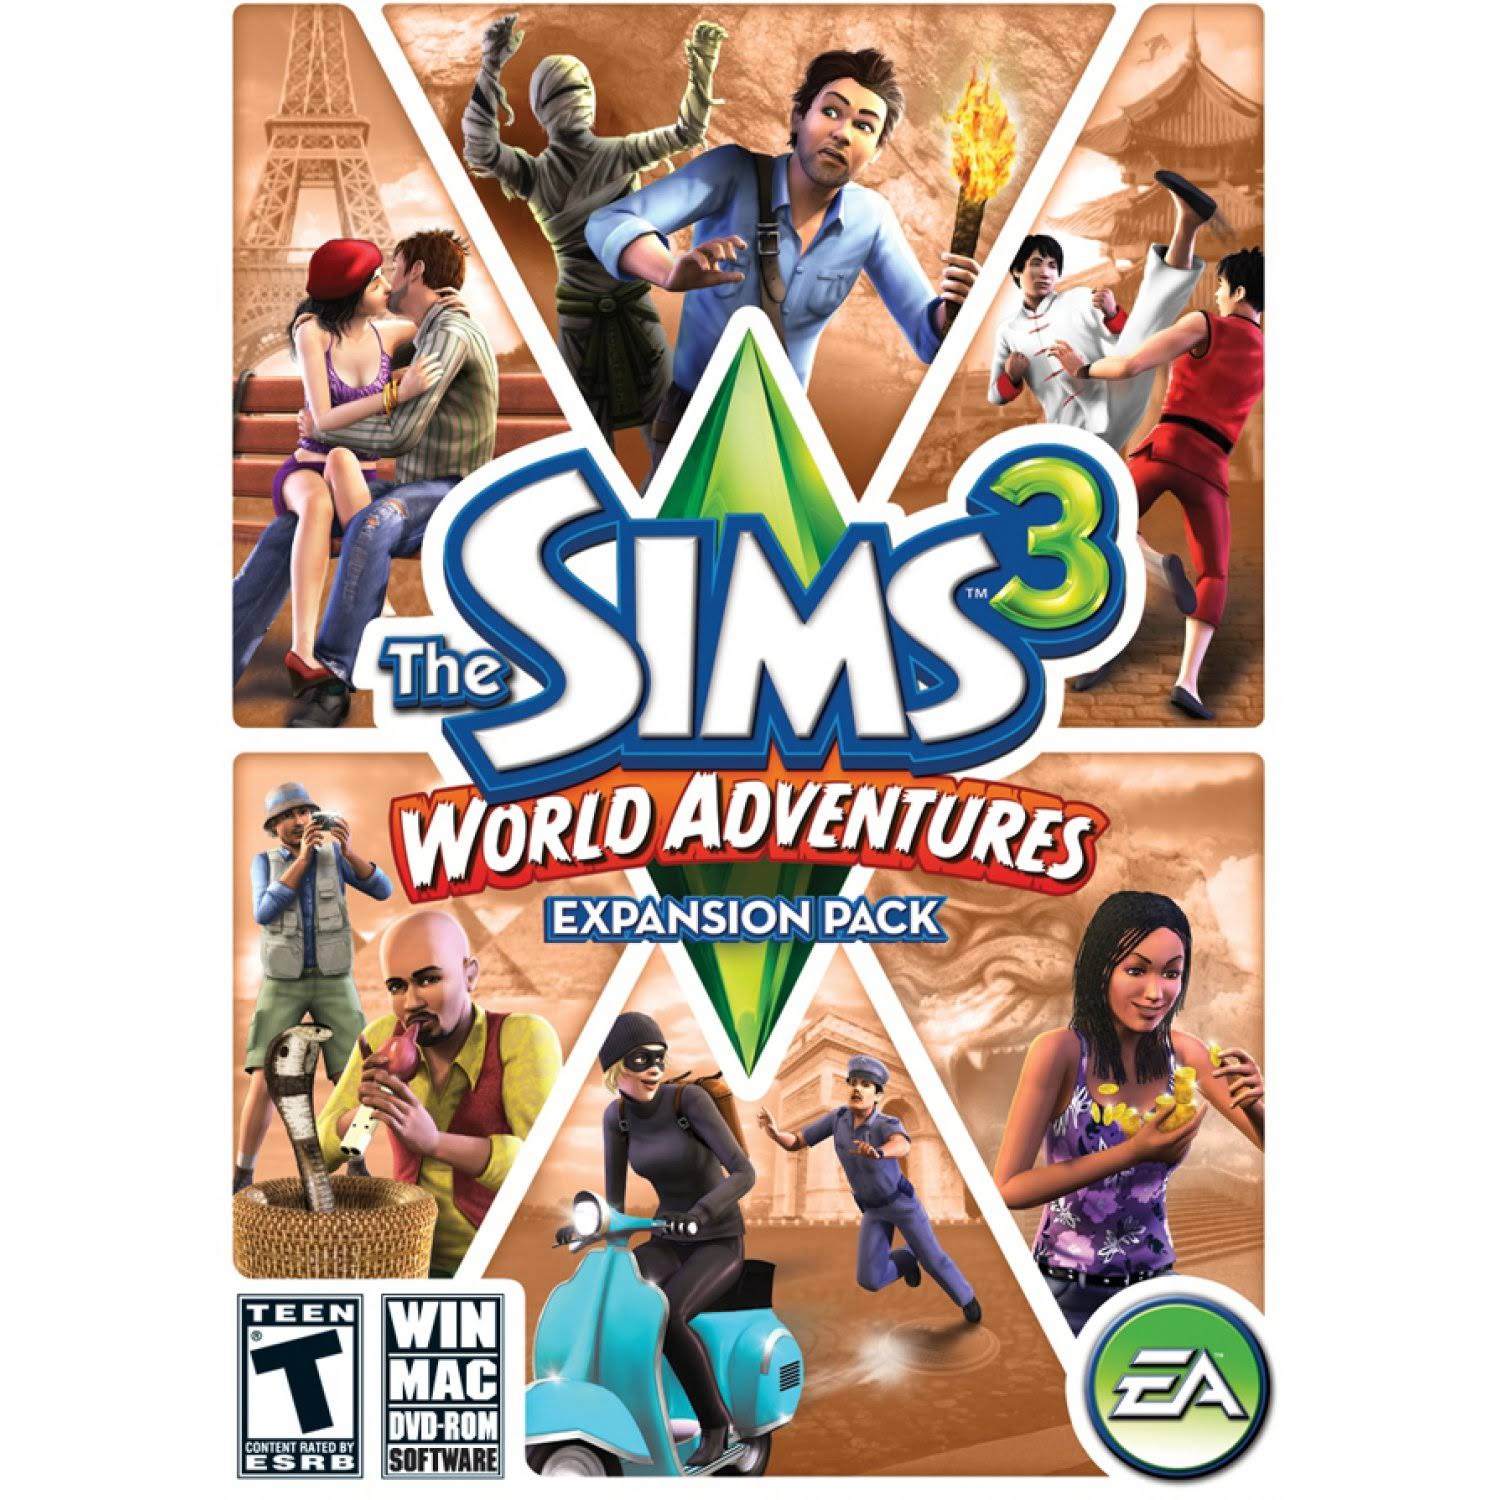 The Sims 3: World Adventures CD Key for Origin